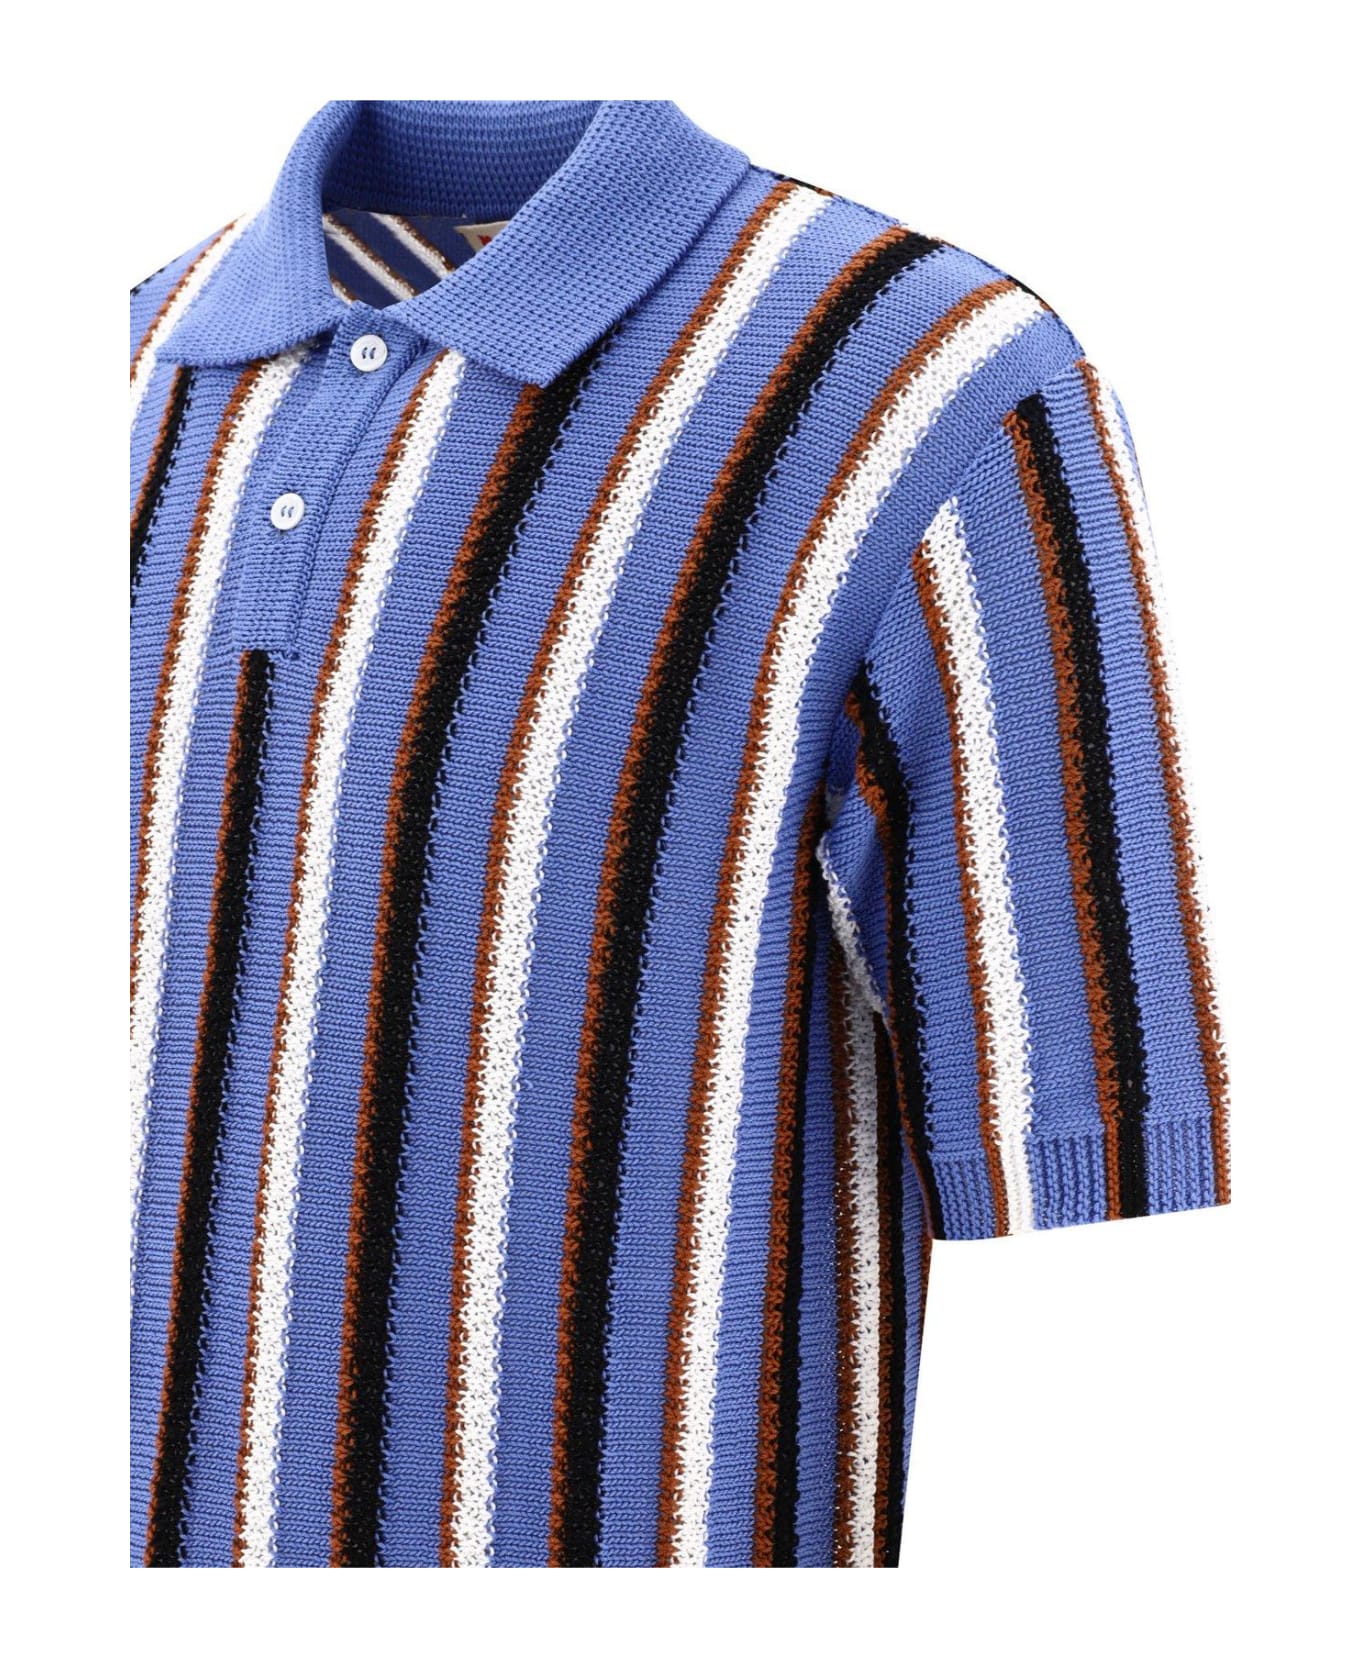 Marni Striped Crocheted Polo Shirt - Azzurro